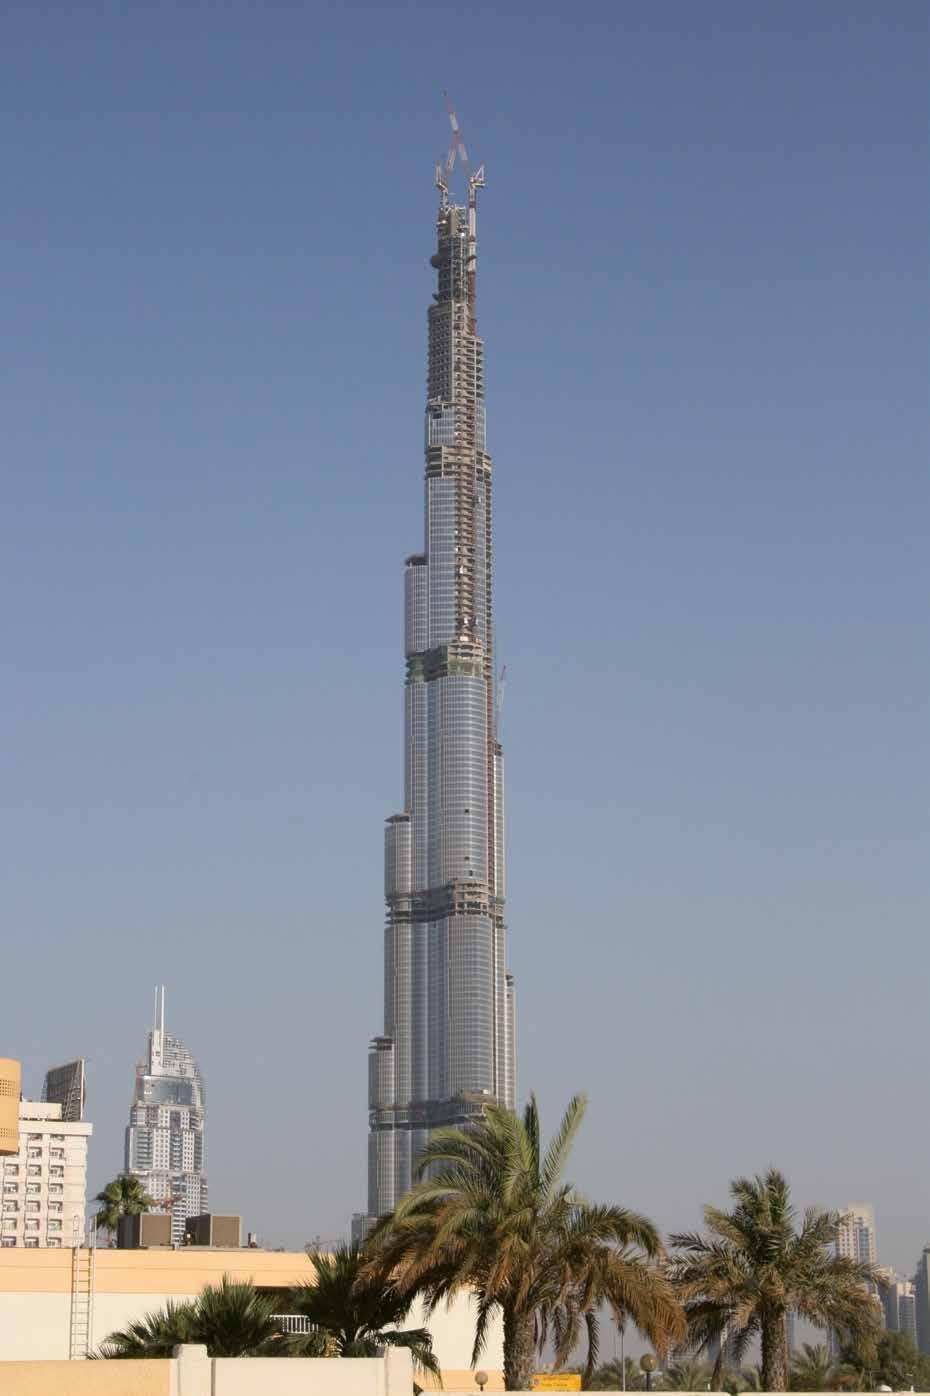 Impact Sound Insulation 145 Burj Khalifa, Dubai: